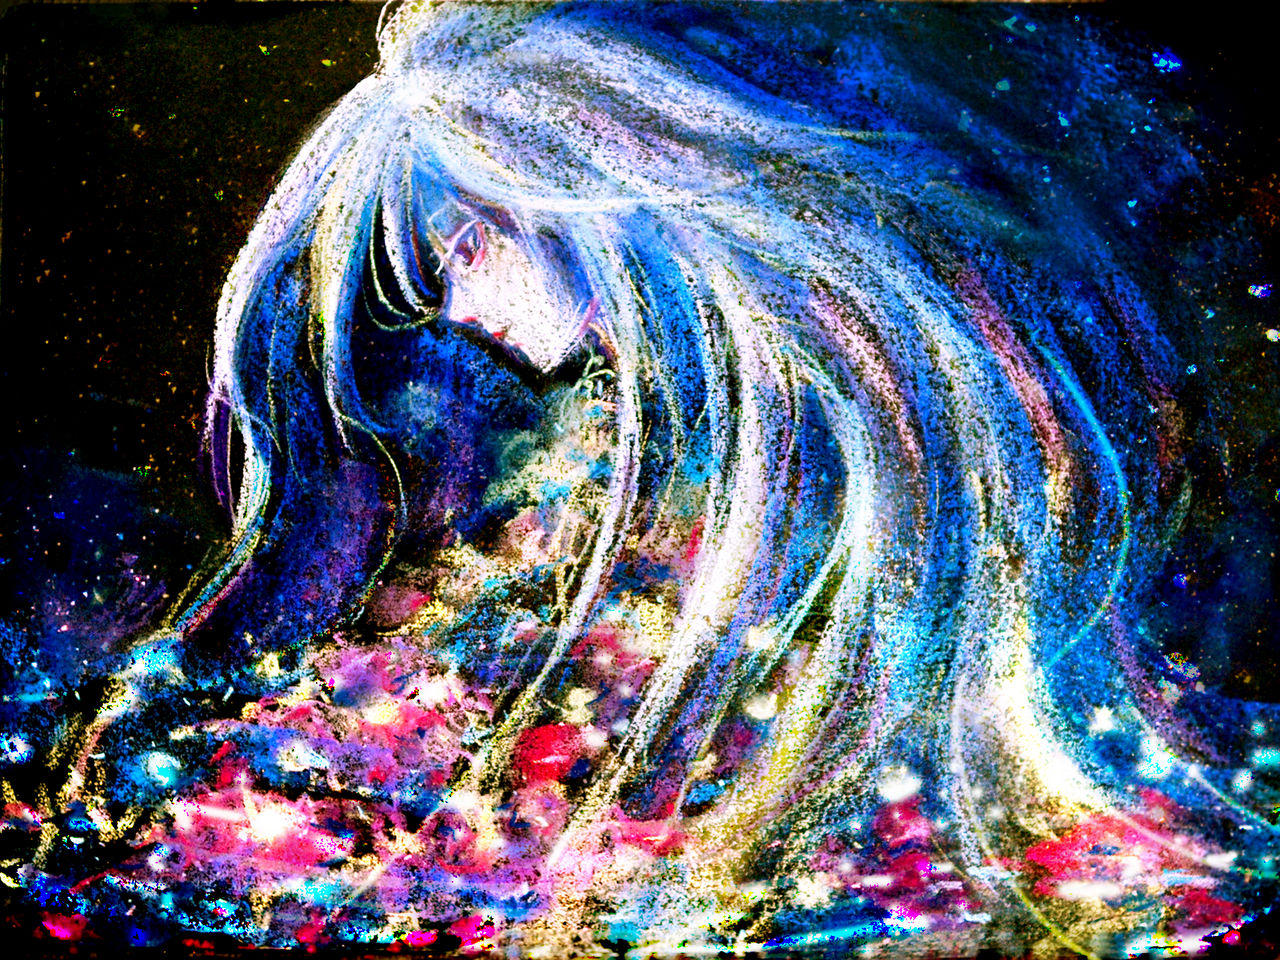 Keinoaza ボカロ全曲リマスターアルバム「The Color of a Moment」を12/8に配信リリースします